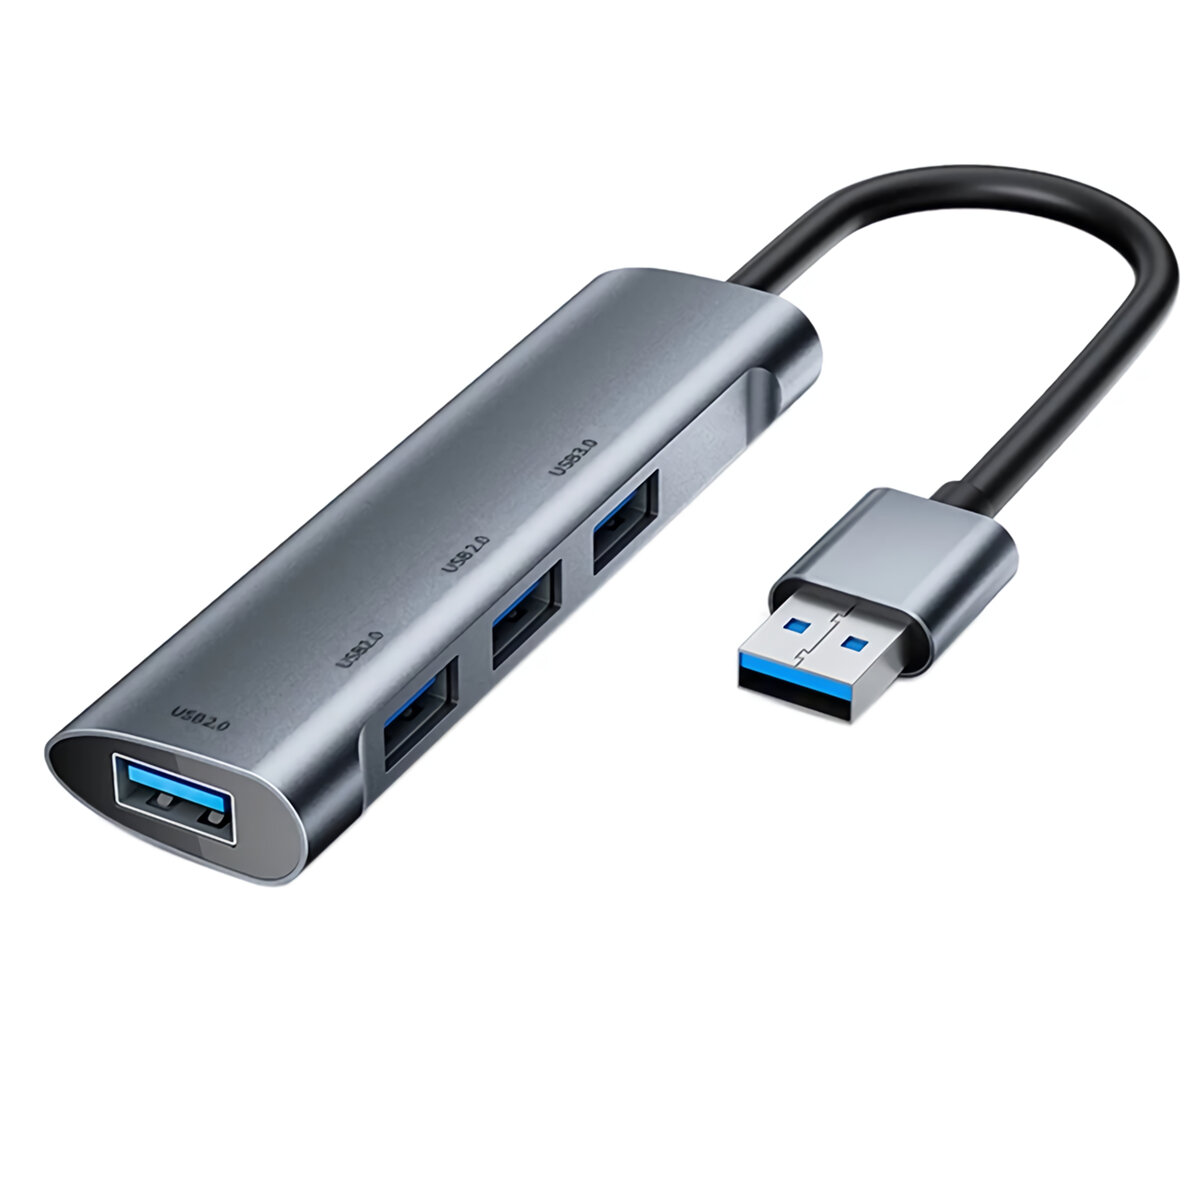 4-in-1 USB3.0 Hub USB 3.0 / 2.0 5 Gbps High Speed USB Splitter USB Adapter Converter Docking Station